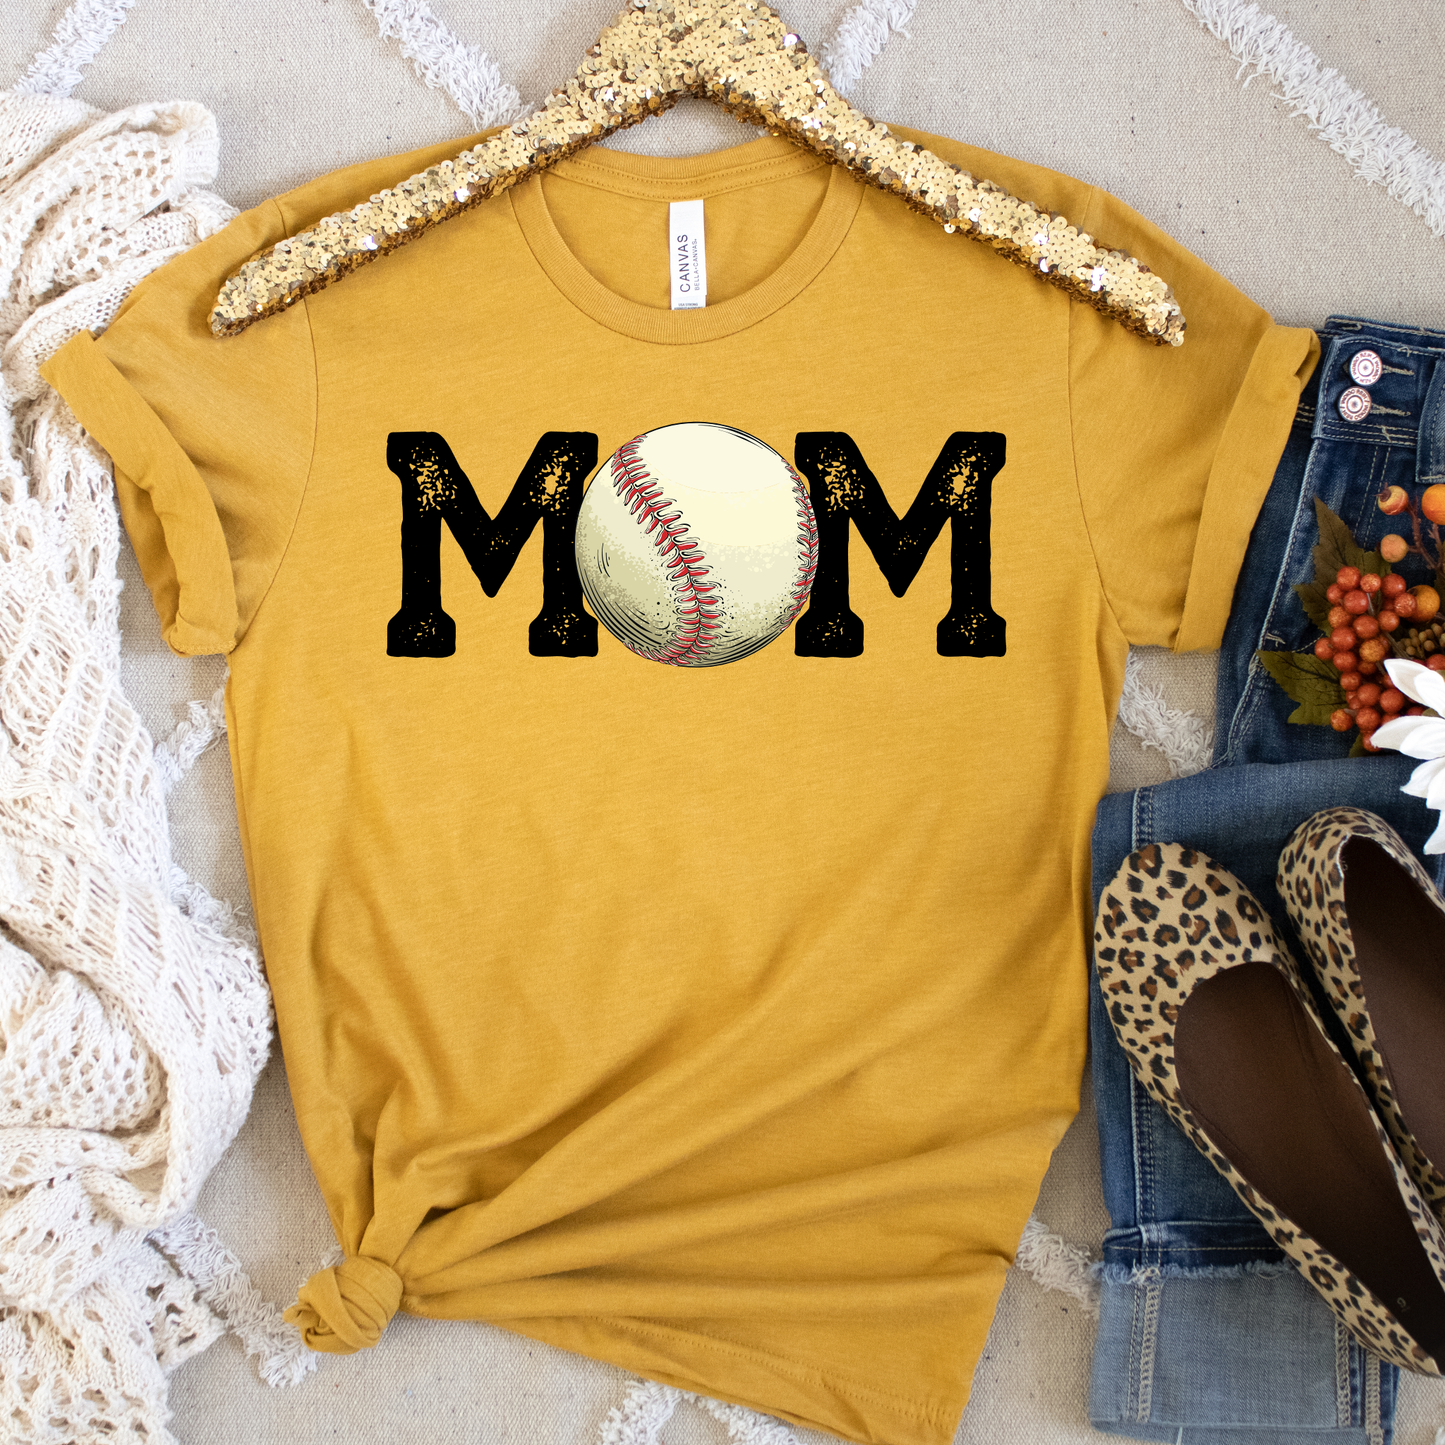 Baseball Mom - Baseball Tee